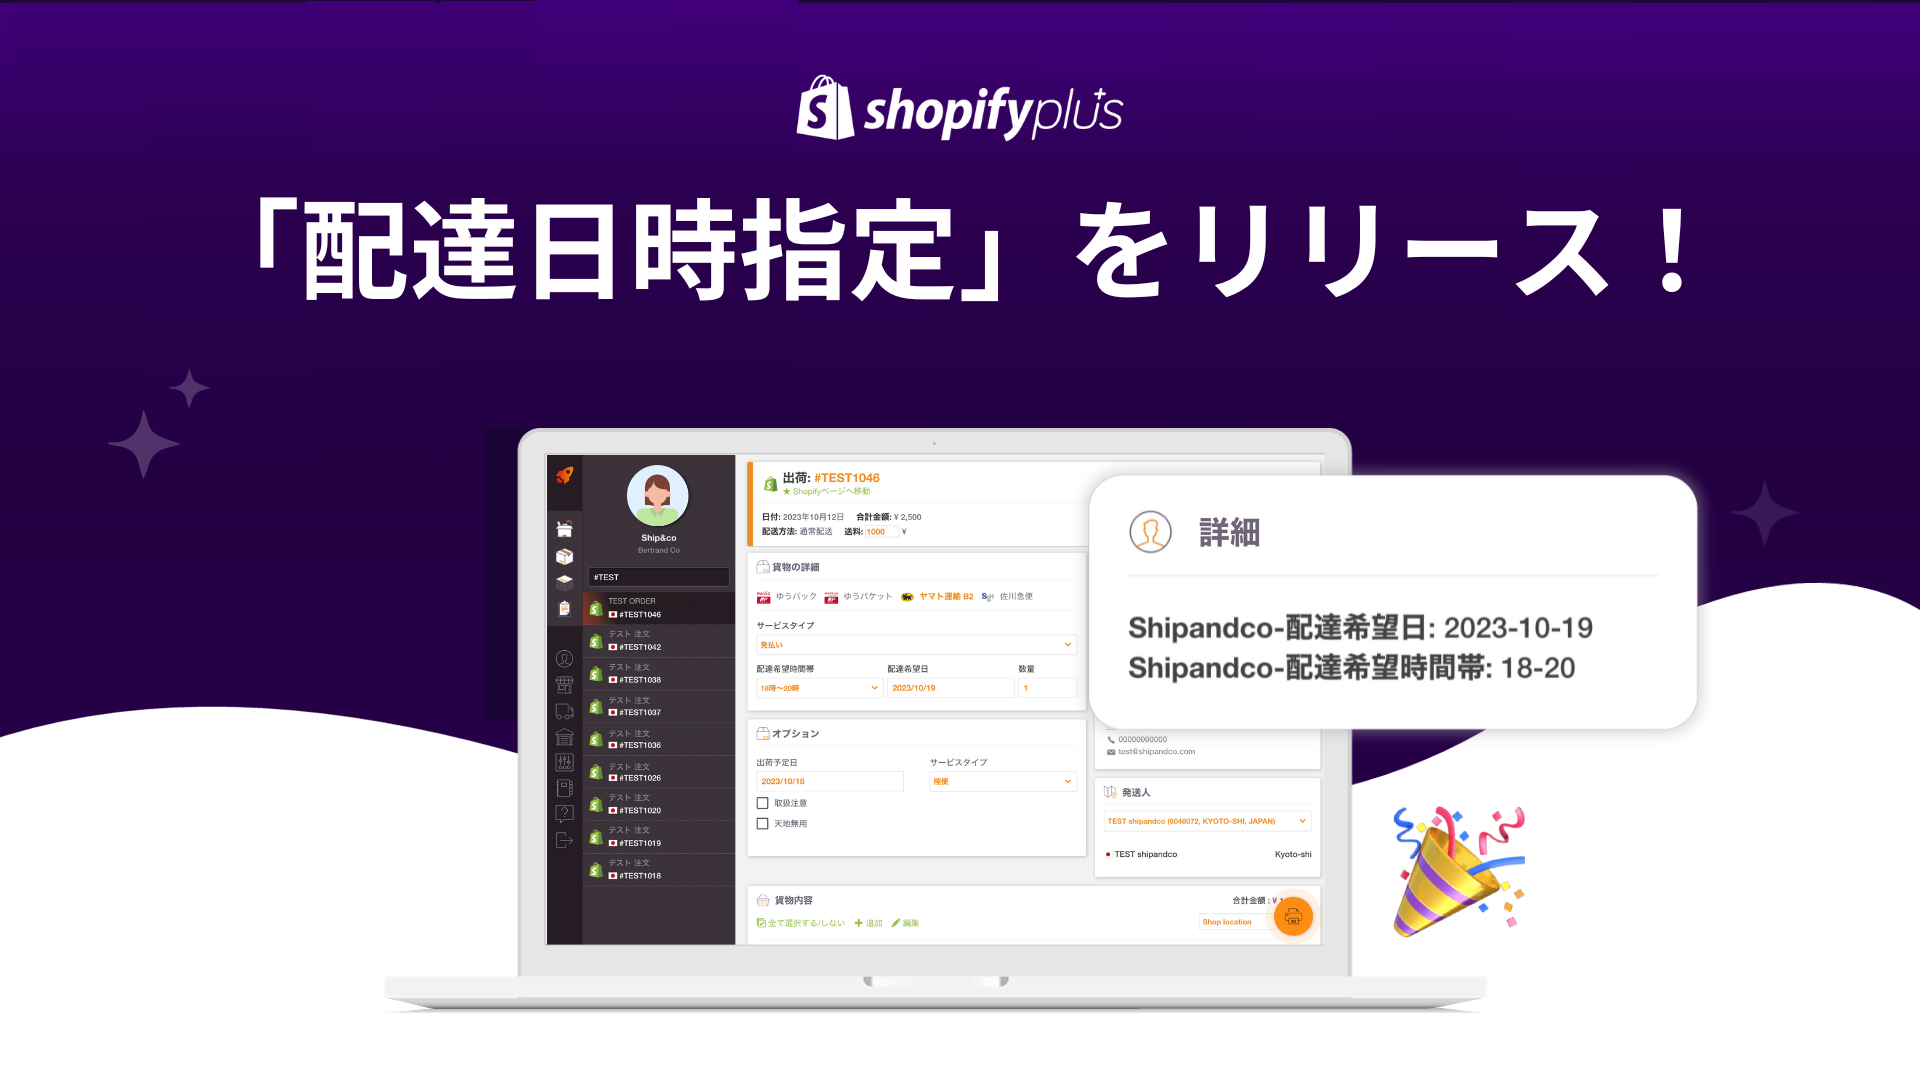 Ship&coでShopifyチェックアウトの「配達日時指定」が可能に！